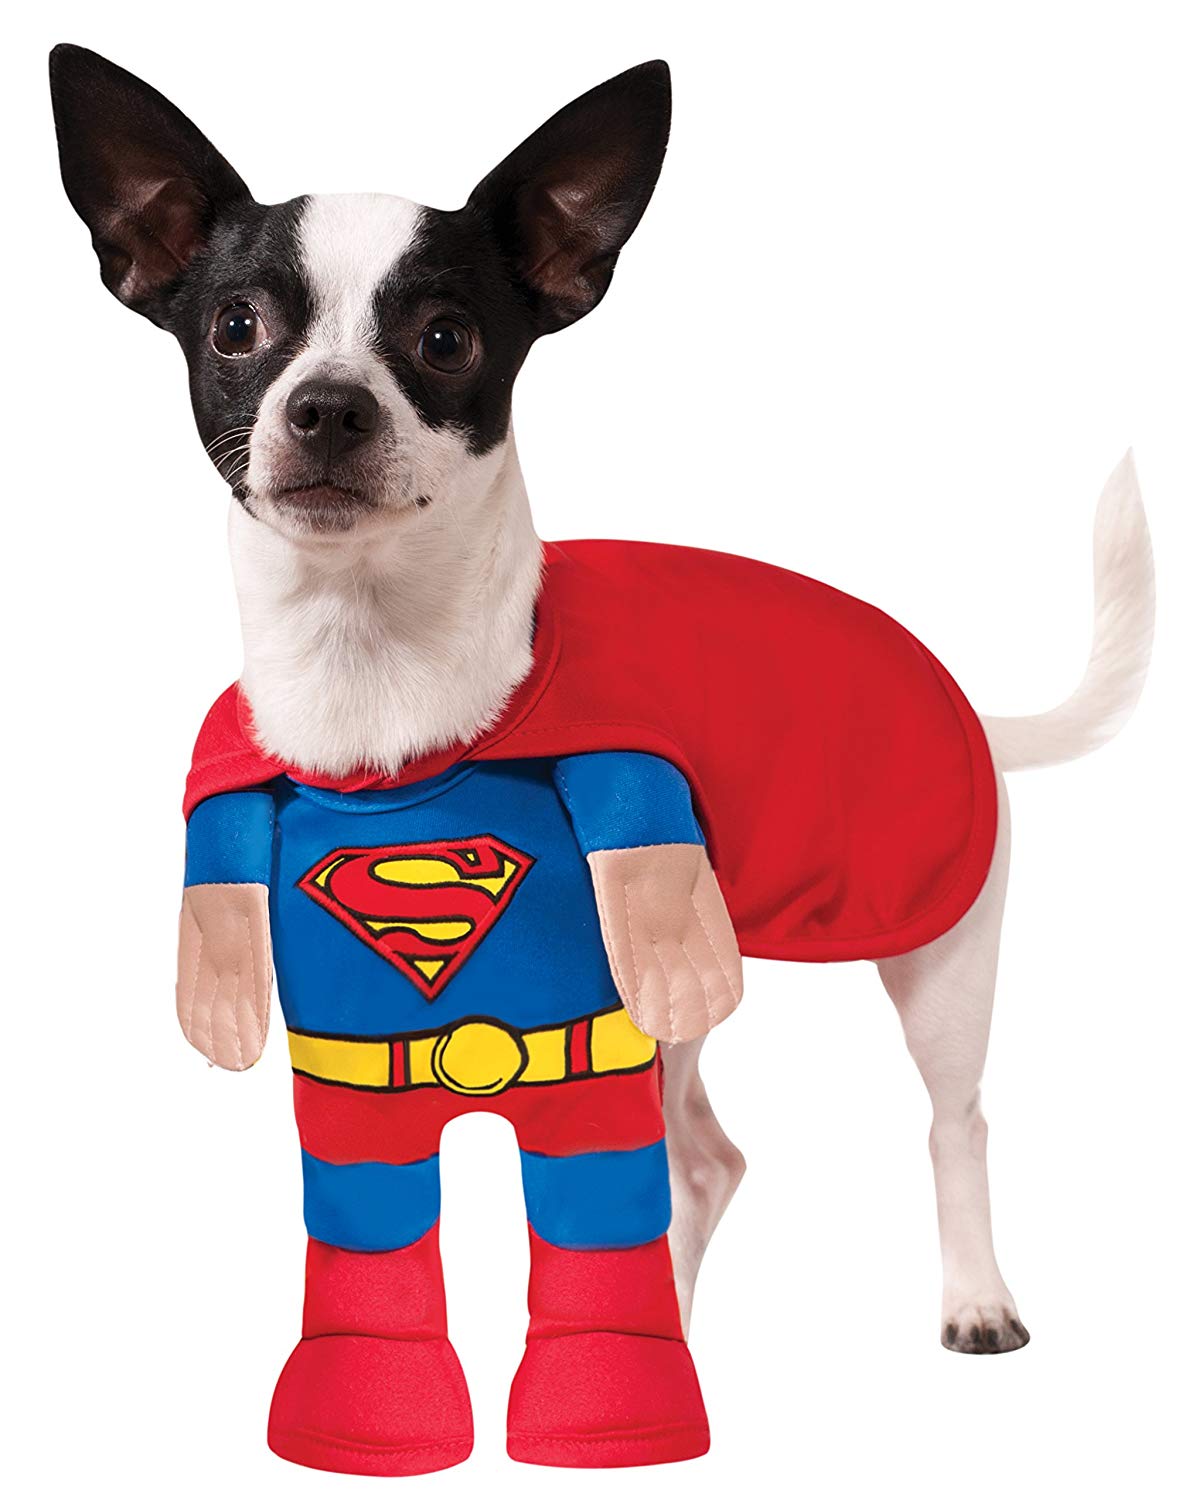 Chihuahua wearing a Superman Costume